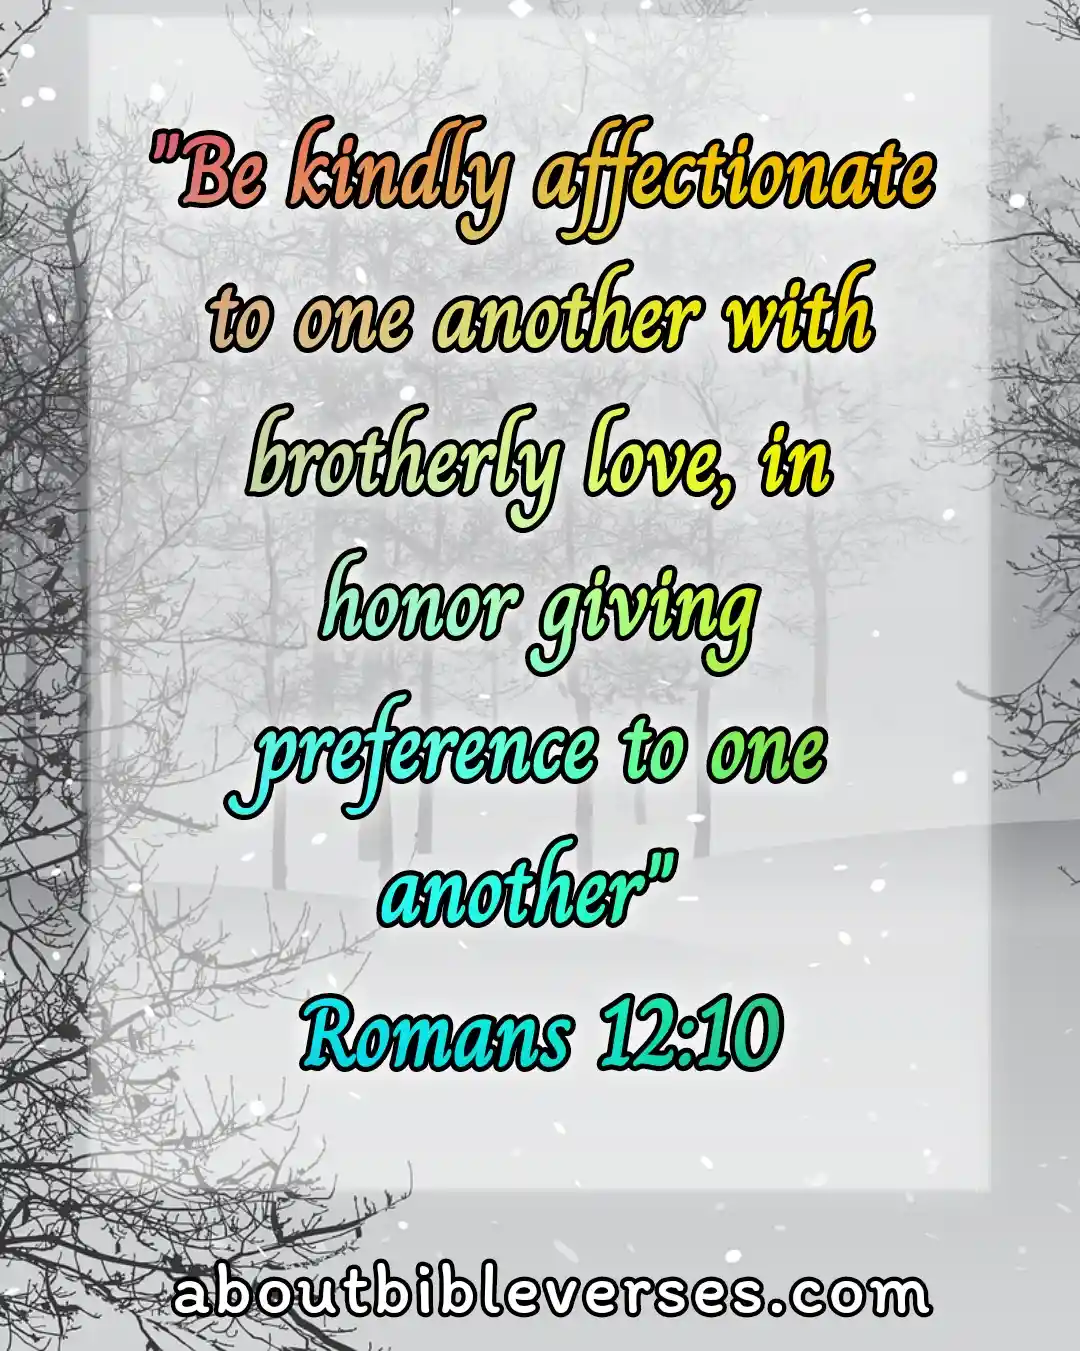 today bible verse (Romans 12:10)